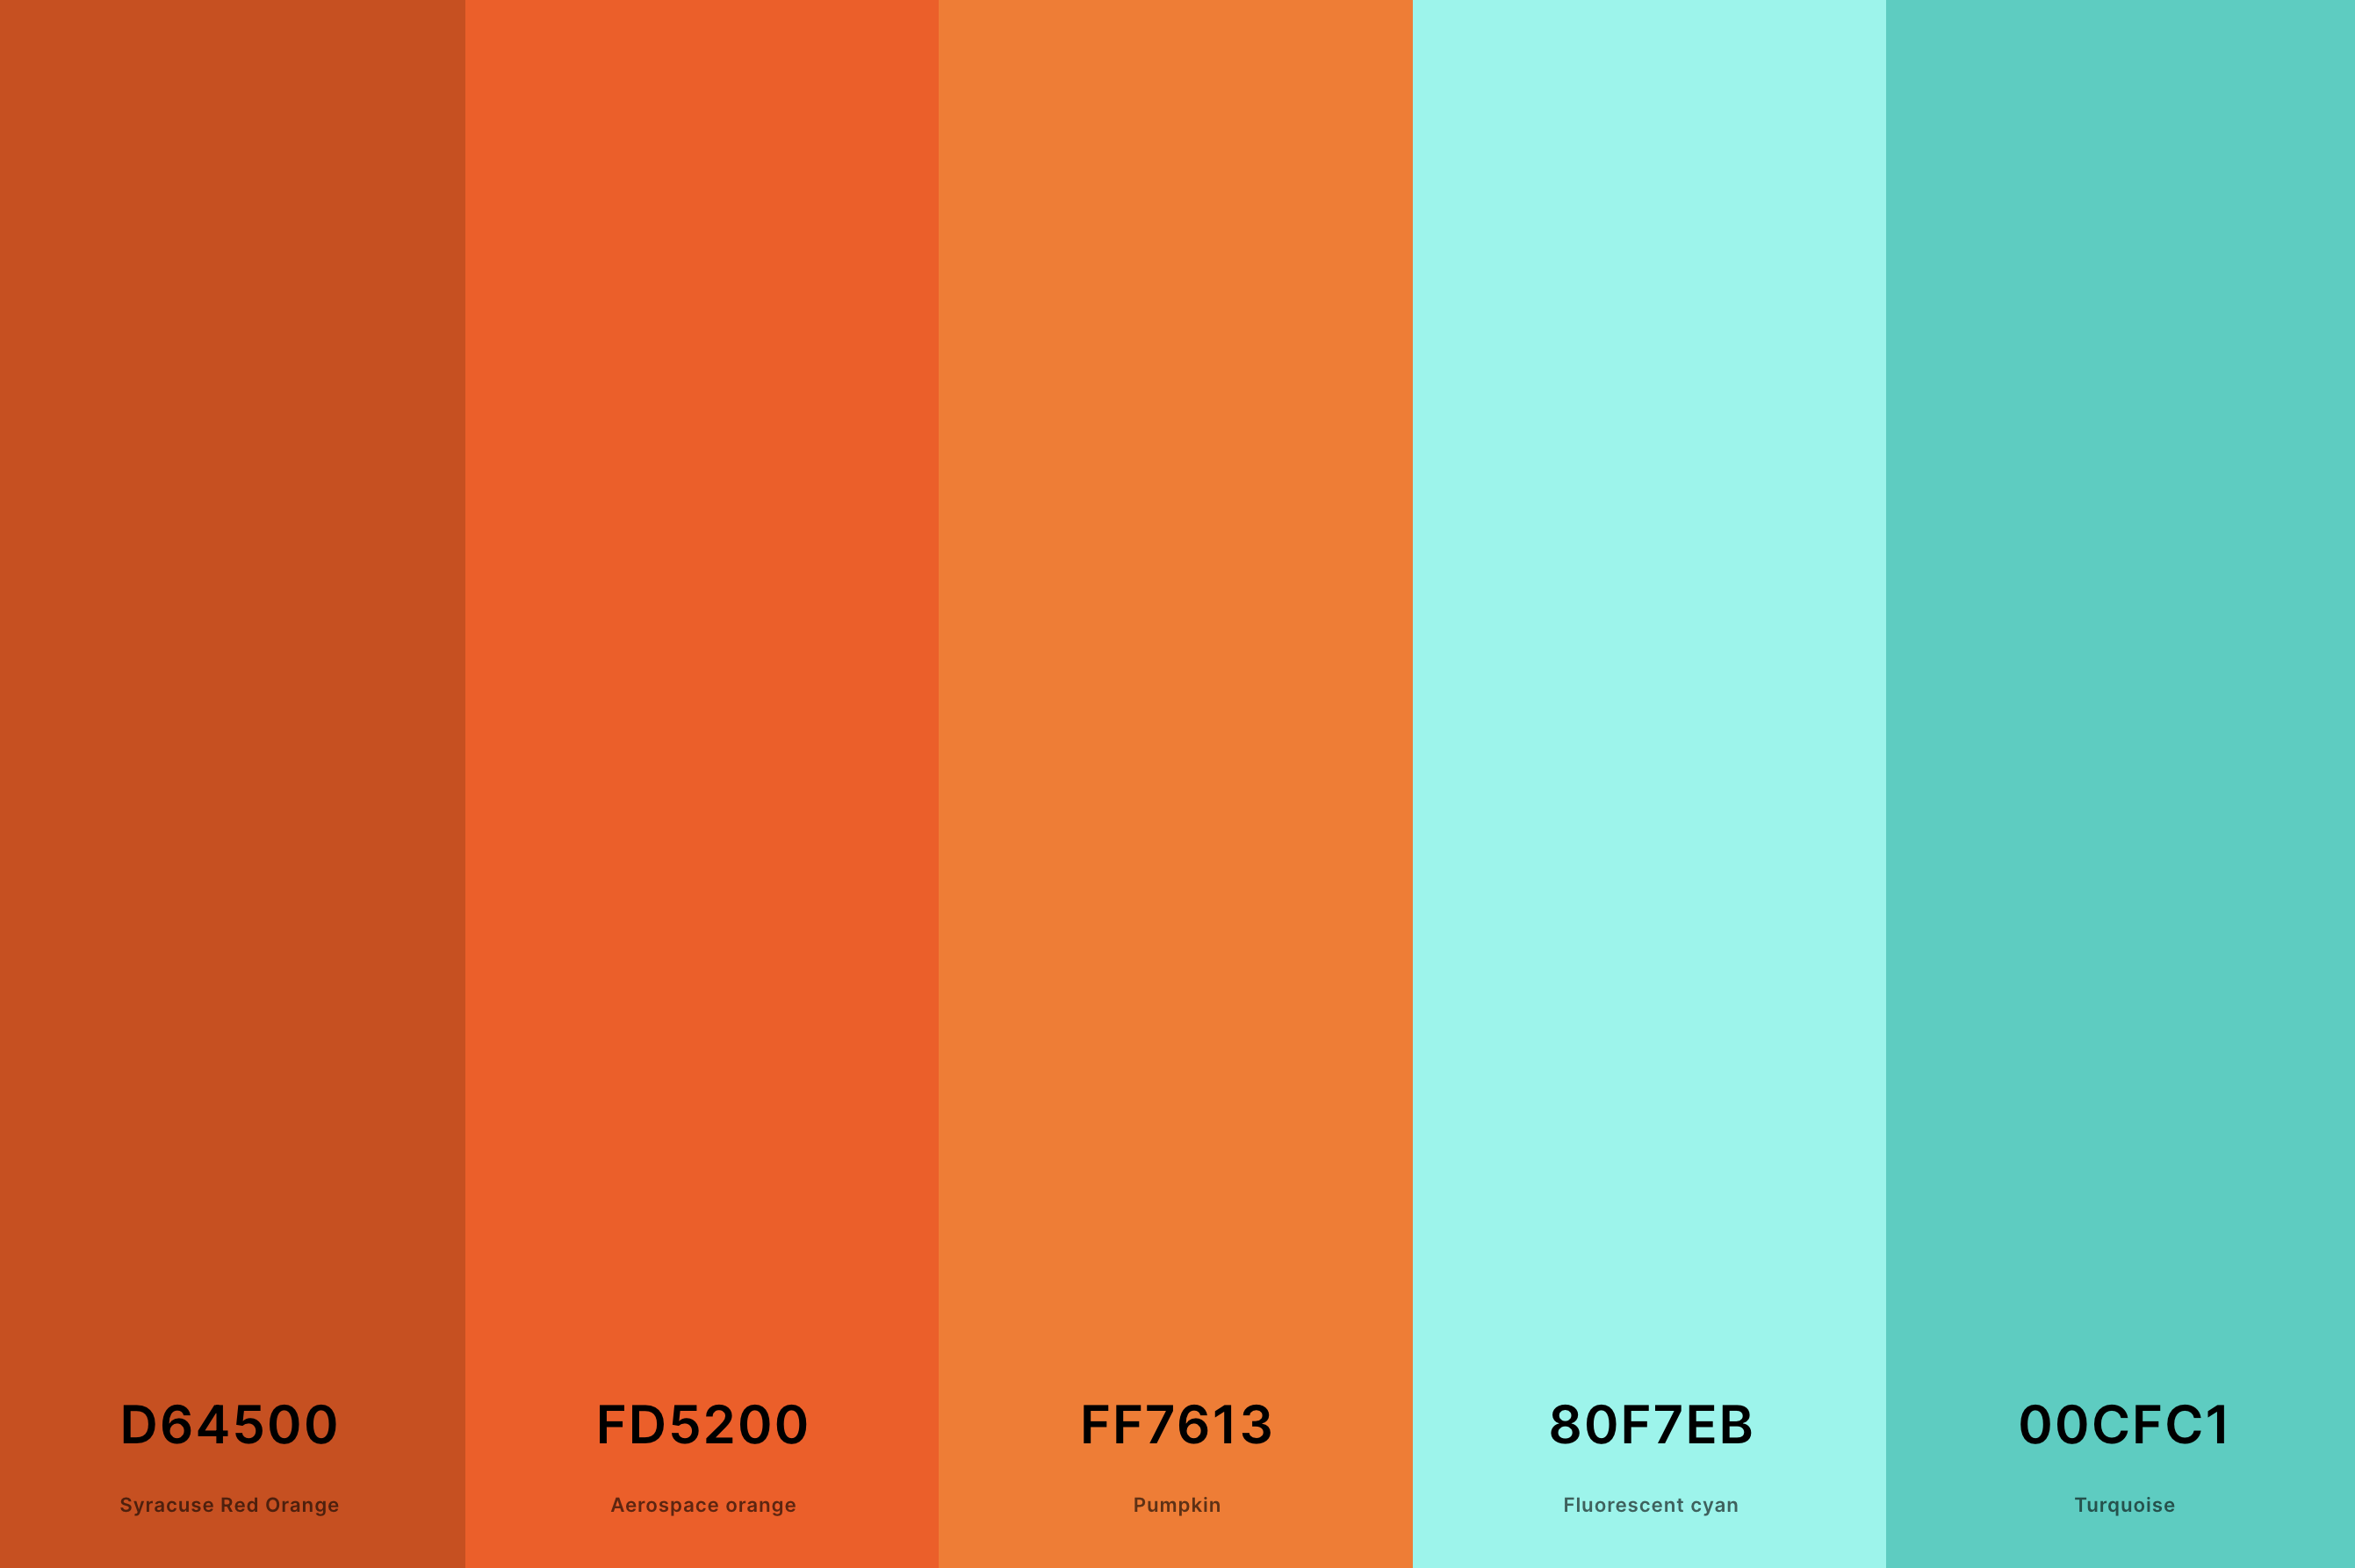 15. Orange And Turquoise Color Palette Color Palette with Syracuse Red Orange (Hex #D64500) + Aerospace Orange (Hex #FD5200) + Pumpkin (Hex #FF7613) + Fluorescent Cyan (Hex #80F7EB) + Turquoise (Hex #00CFC1) Color Palette with Hex Codes